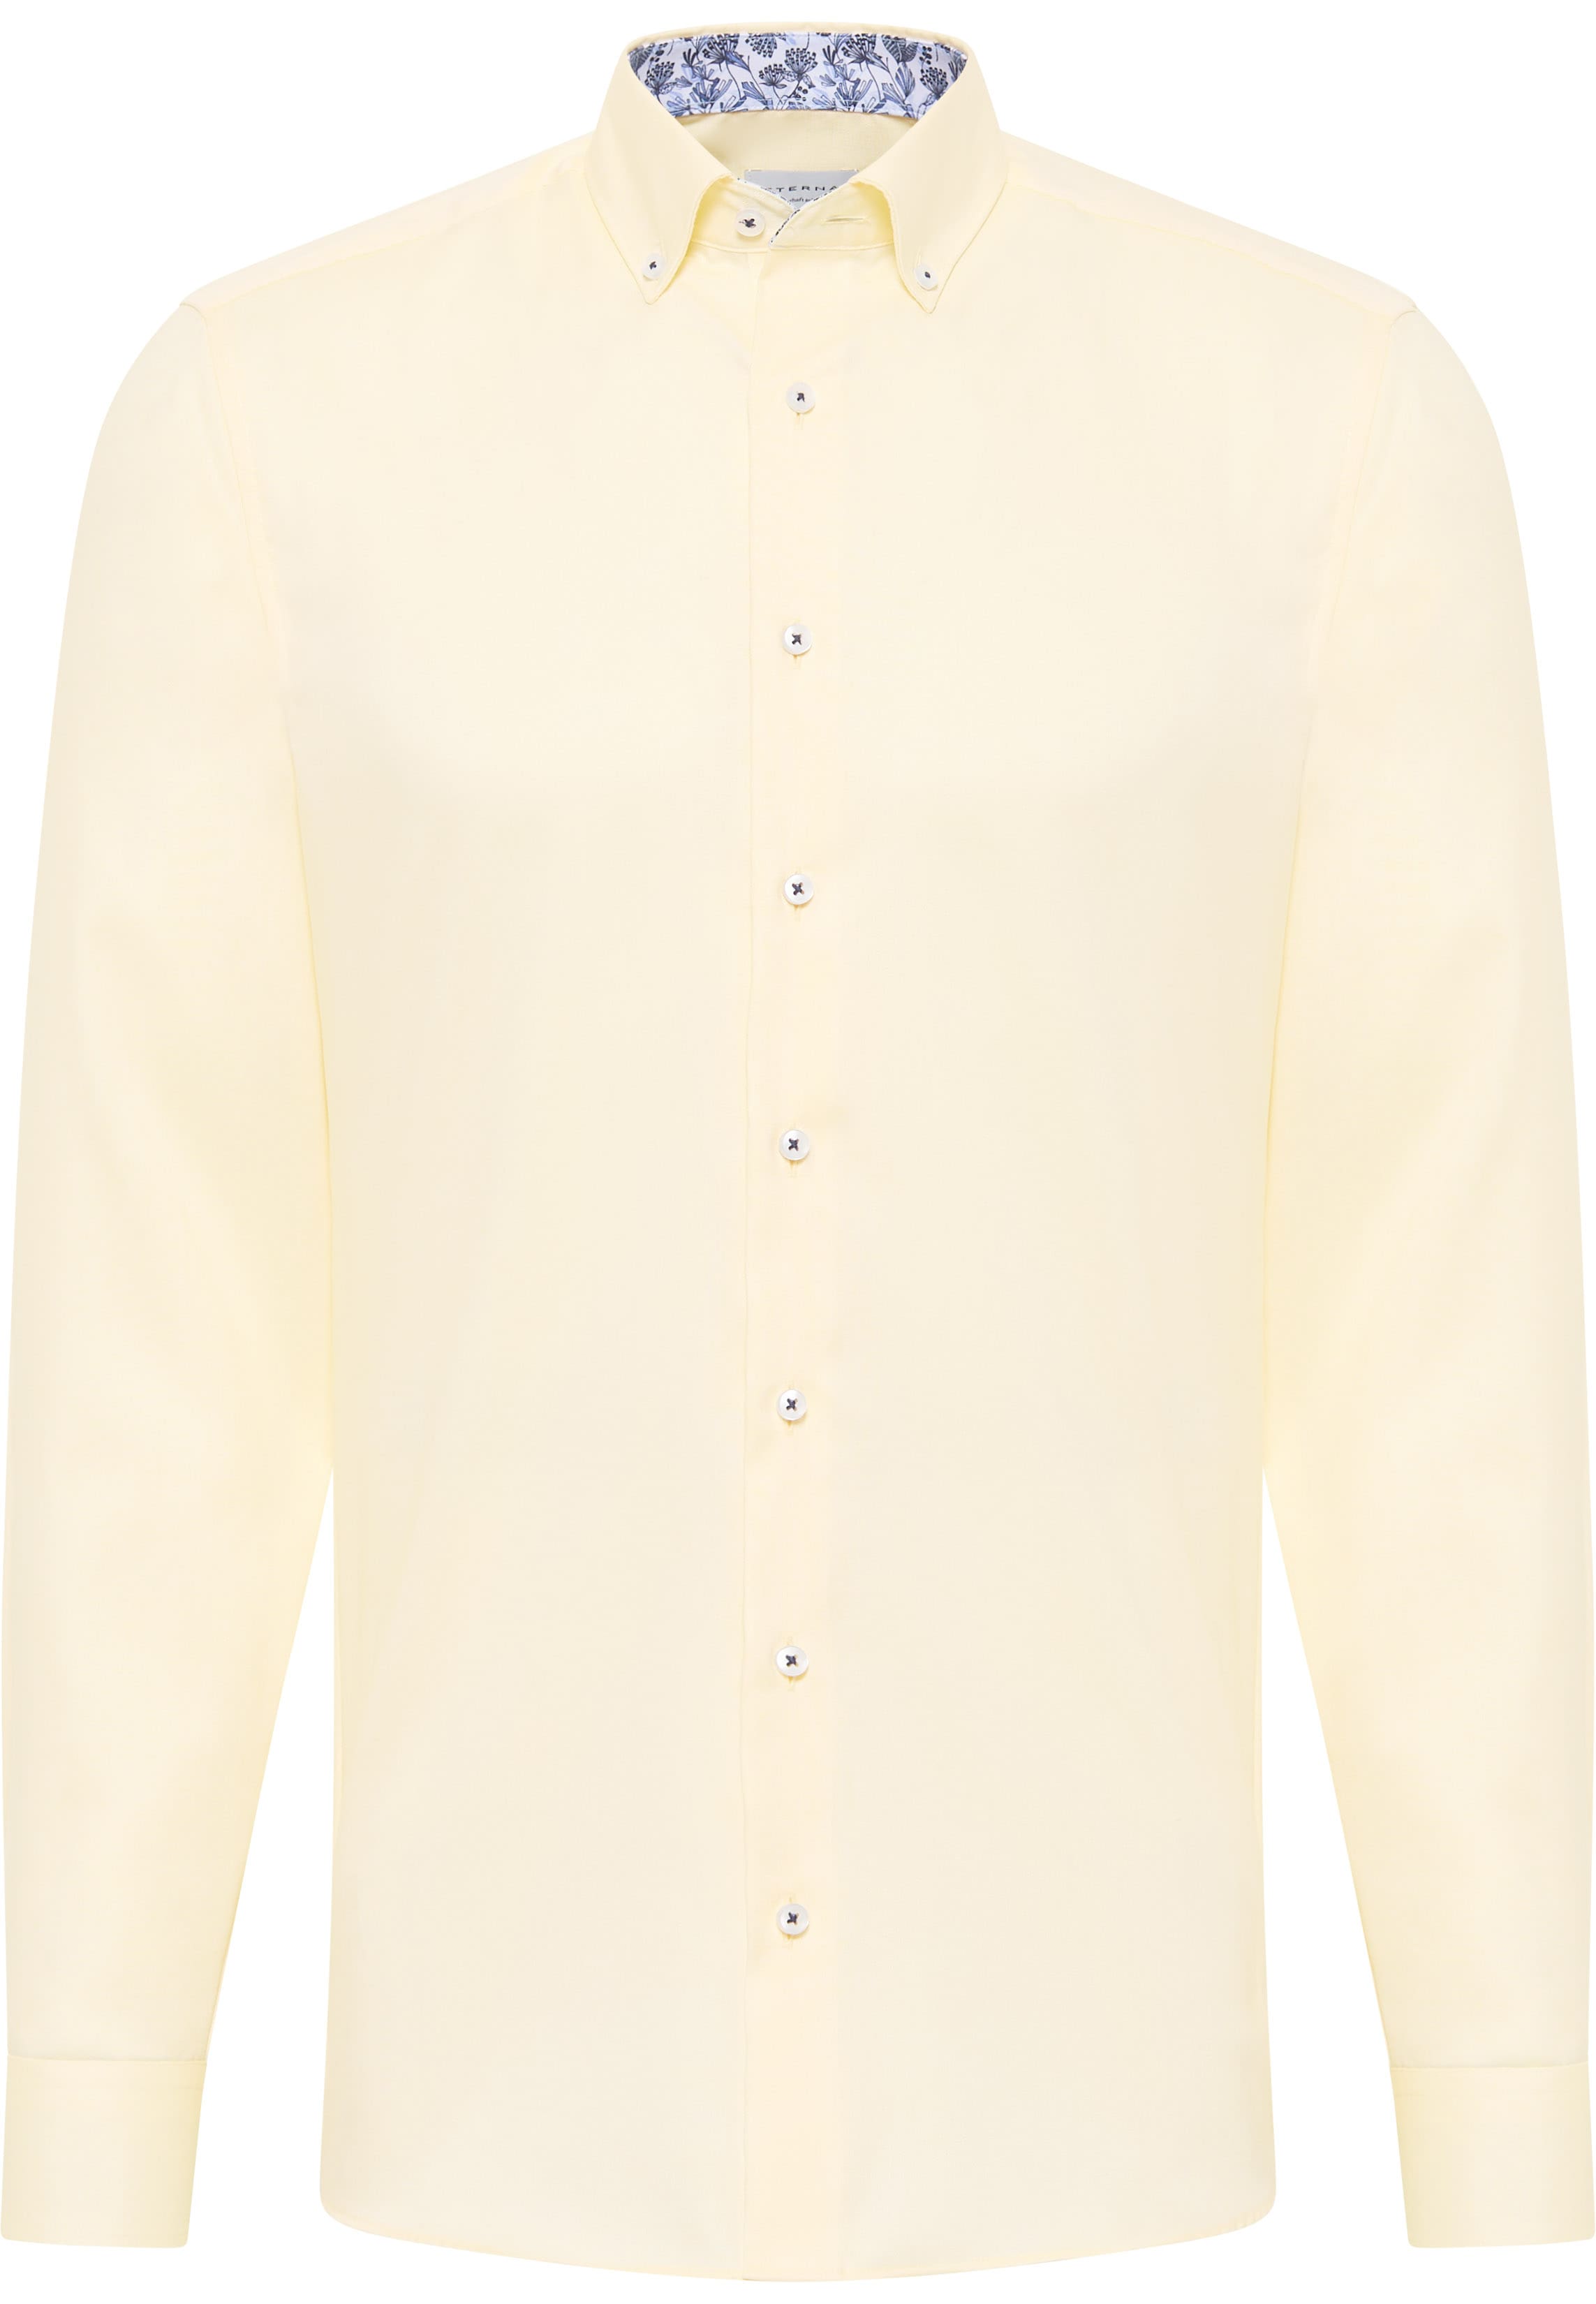 SLIM FIT Shirt in yellow plain